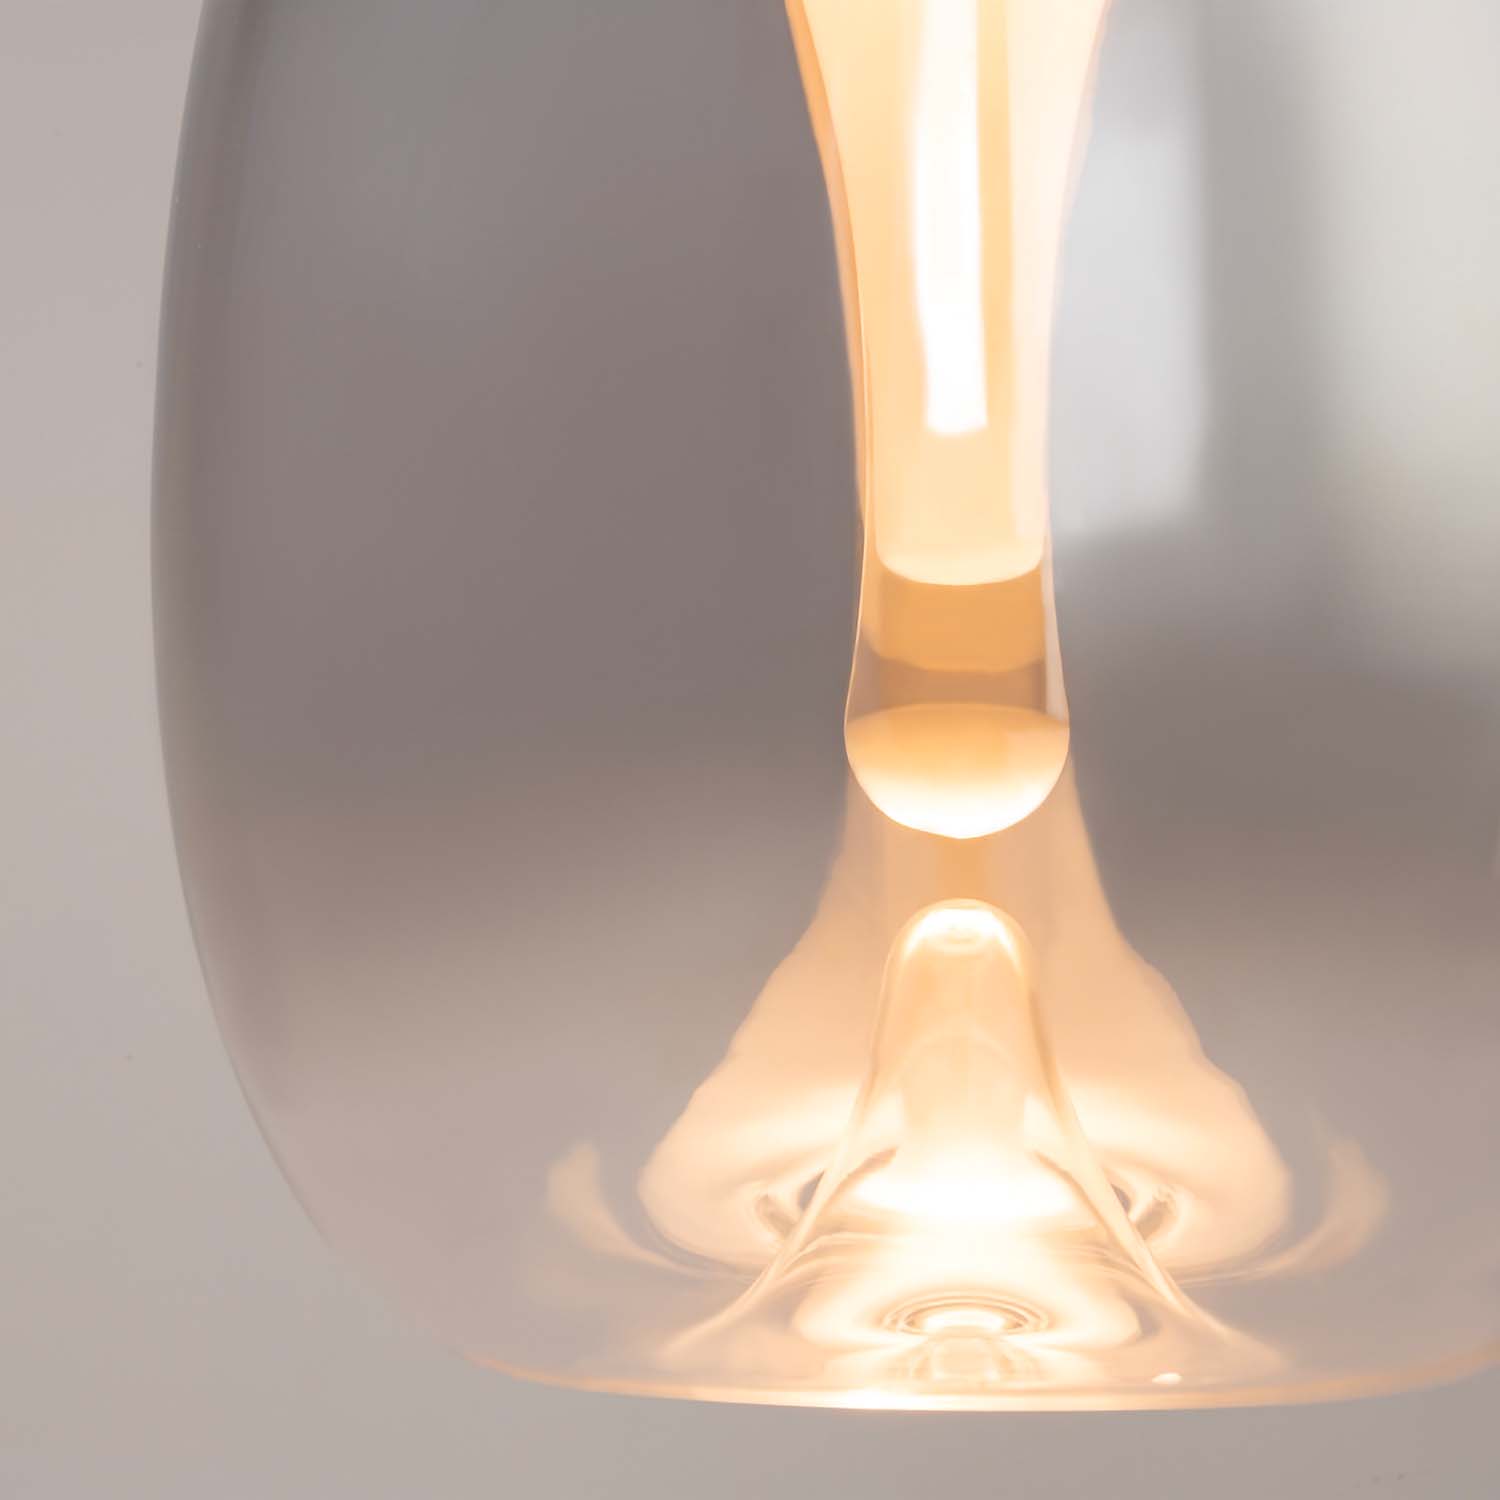 SPLASH - Designer glass pendant light with integrated LED